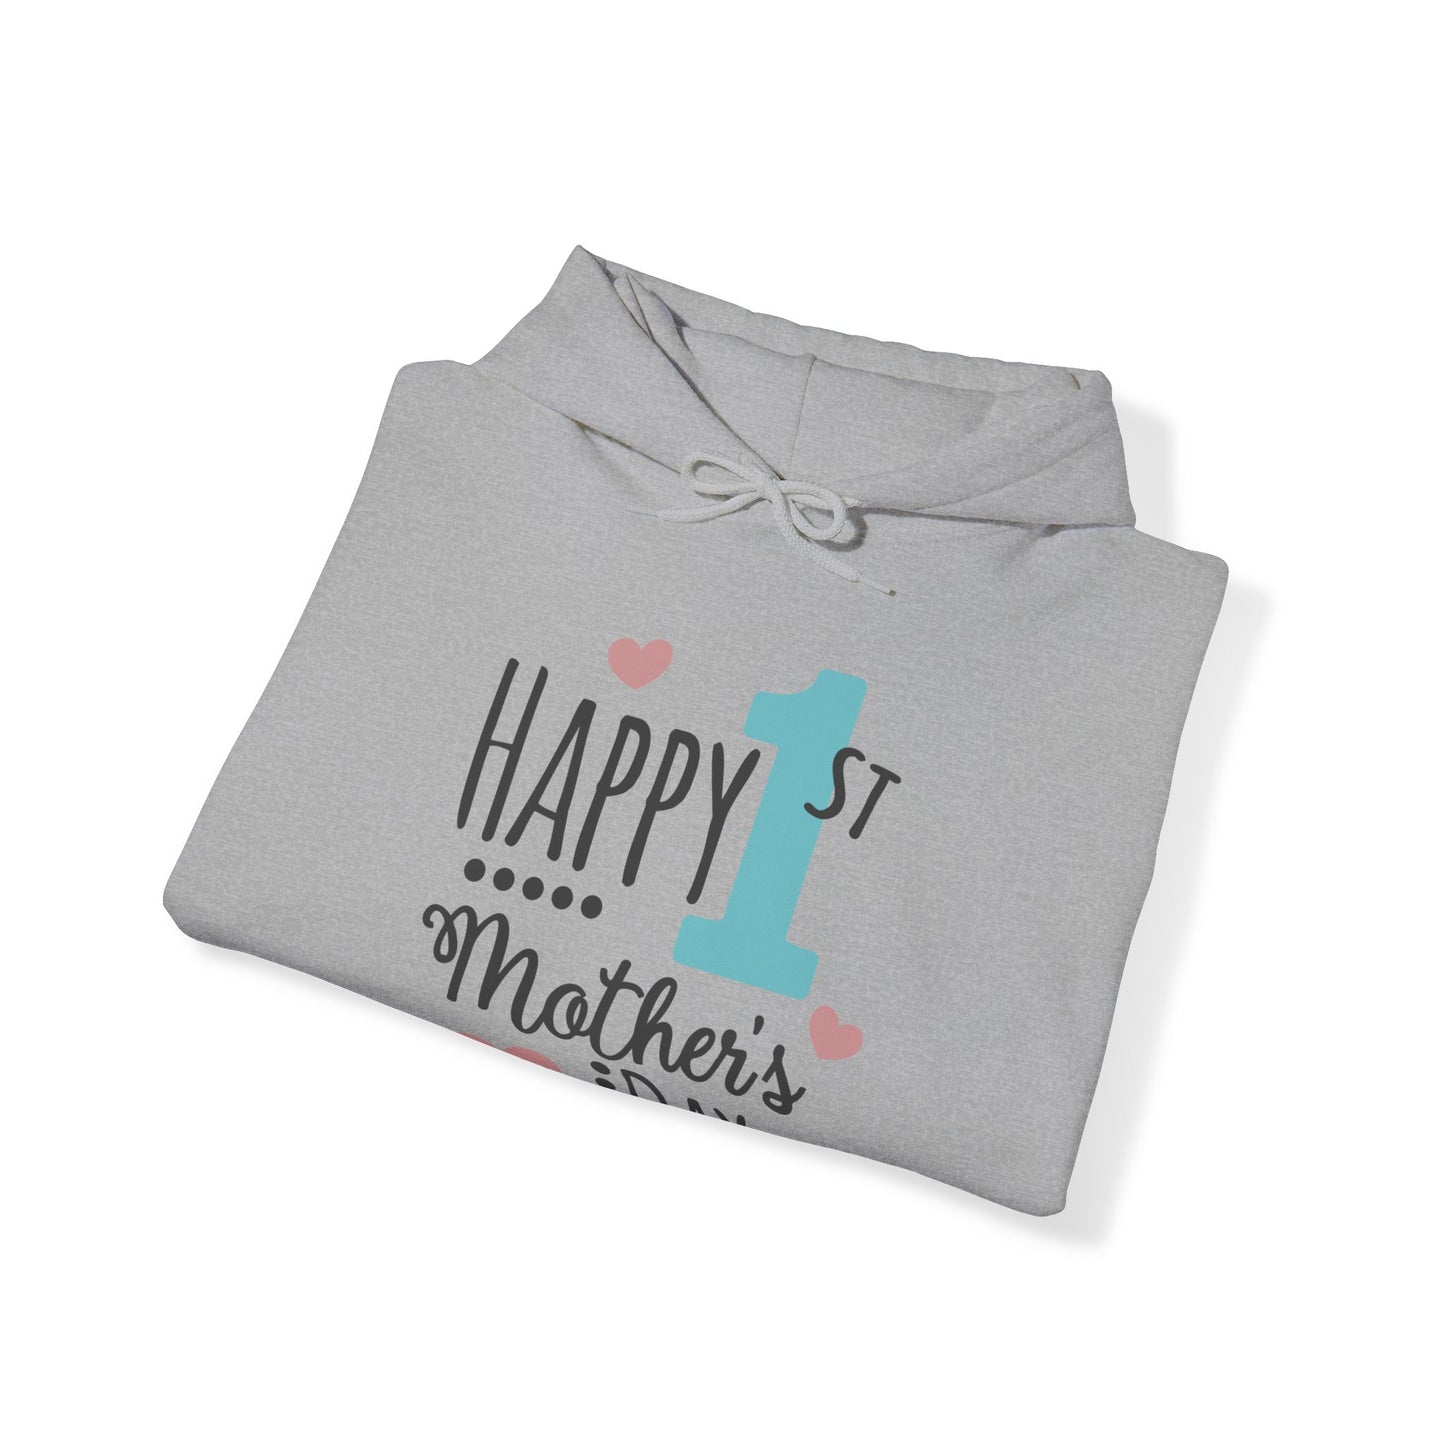 Happy 1st Mother's Day - Unisex Heavy Blend™ Hooded Sweatshirt